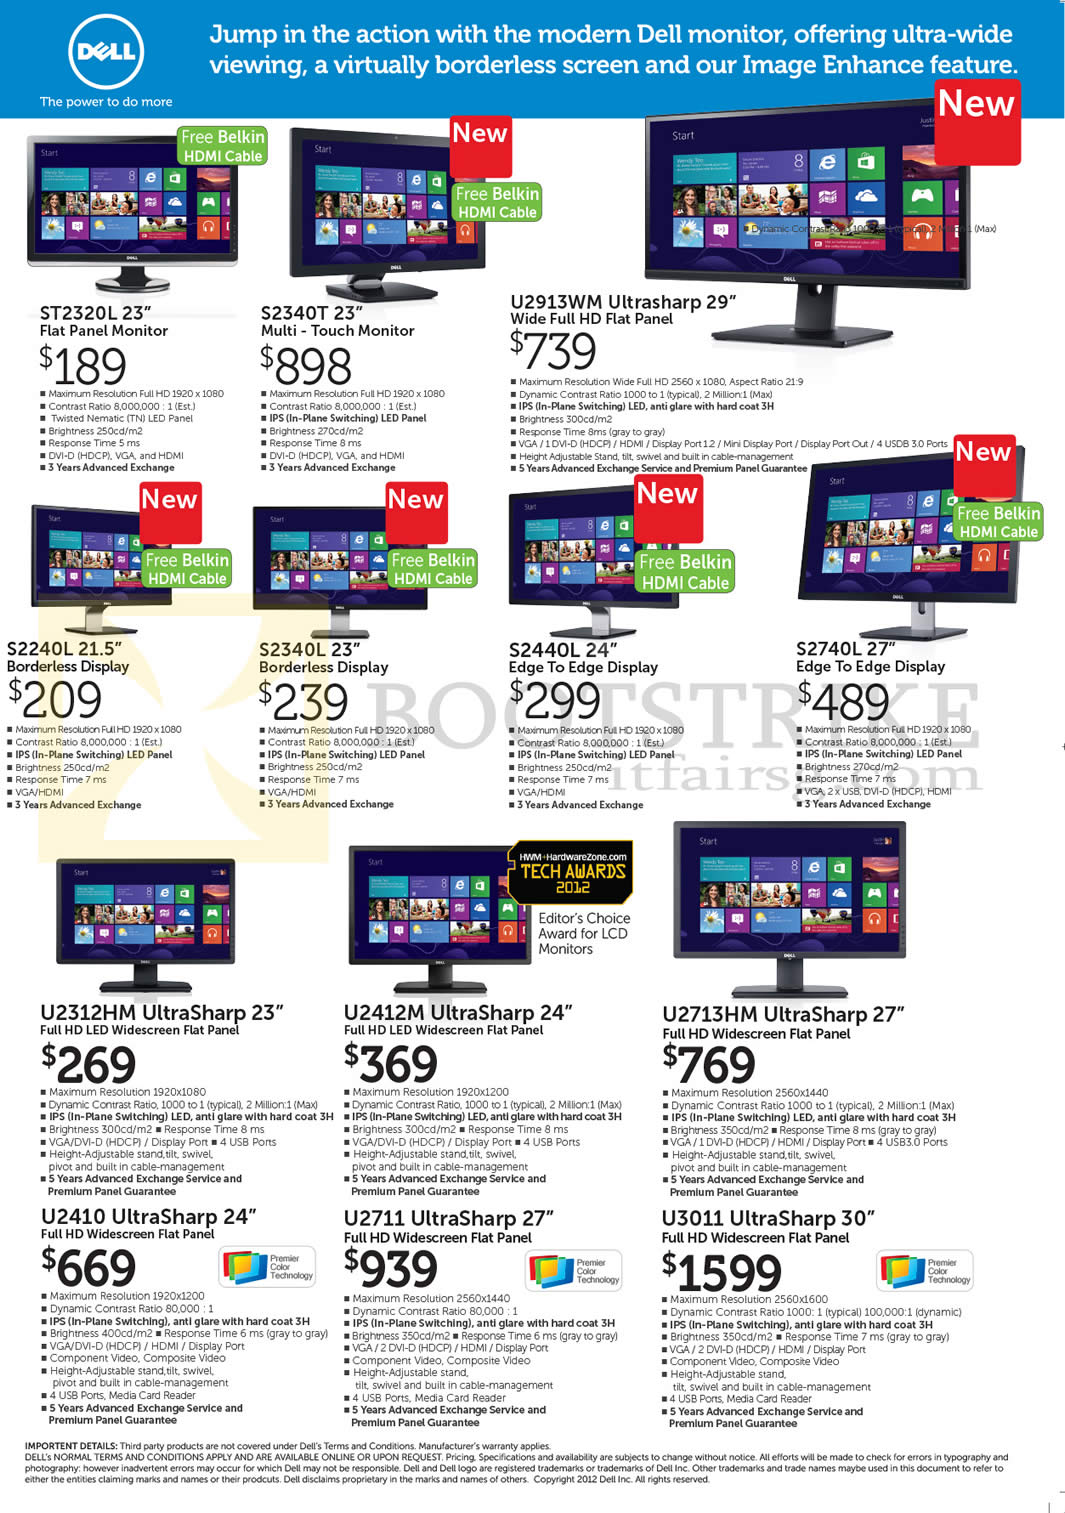 SITEX 2012 price list image brochure of Dell Monitors Ultrasharp ST2320L, LED S2340T, S2240L, S2340L, S2440L, S2740L, U2312HM, U2412M, U2713M, U3011, U2711, U2410